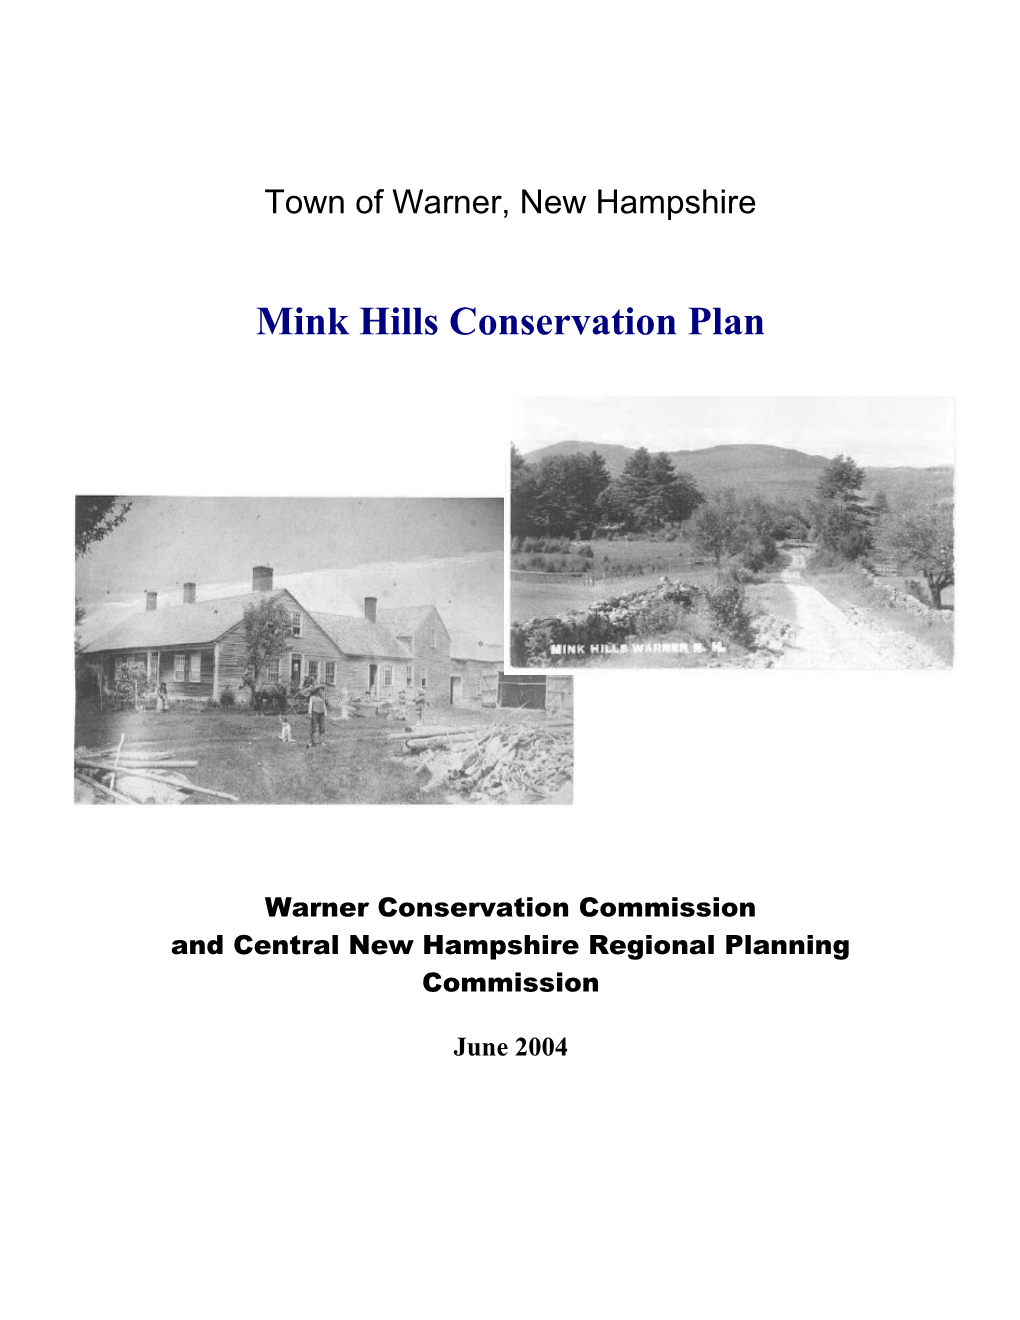 2004 Mink Hills Conservation Plan